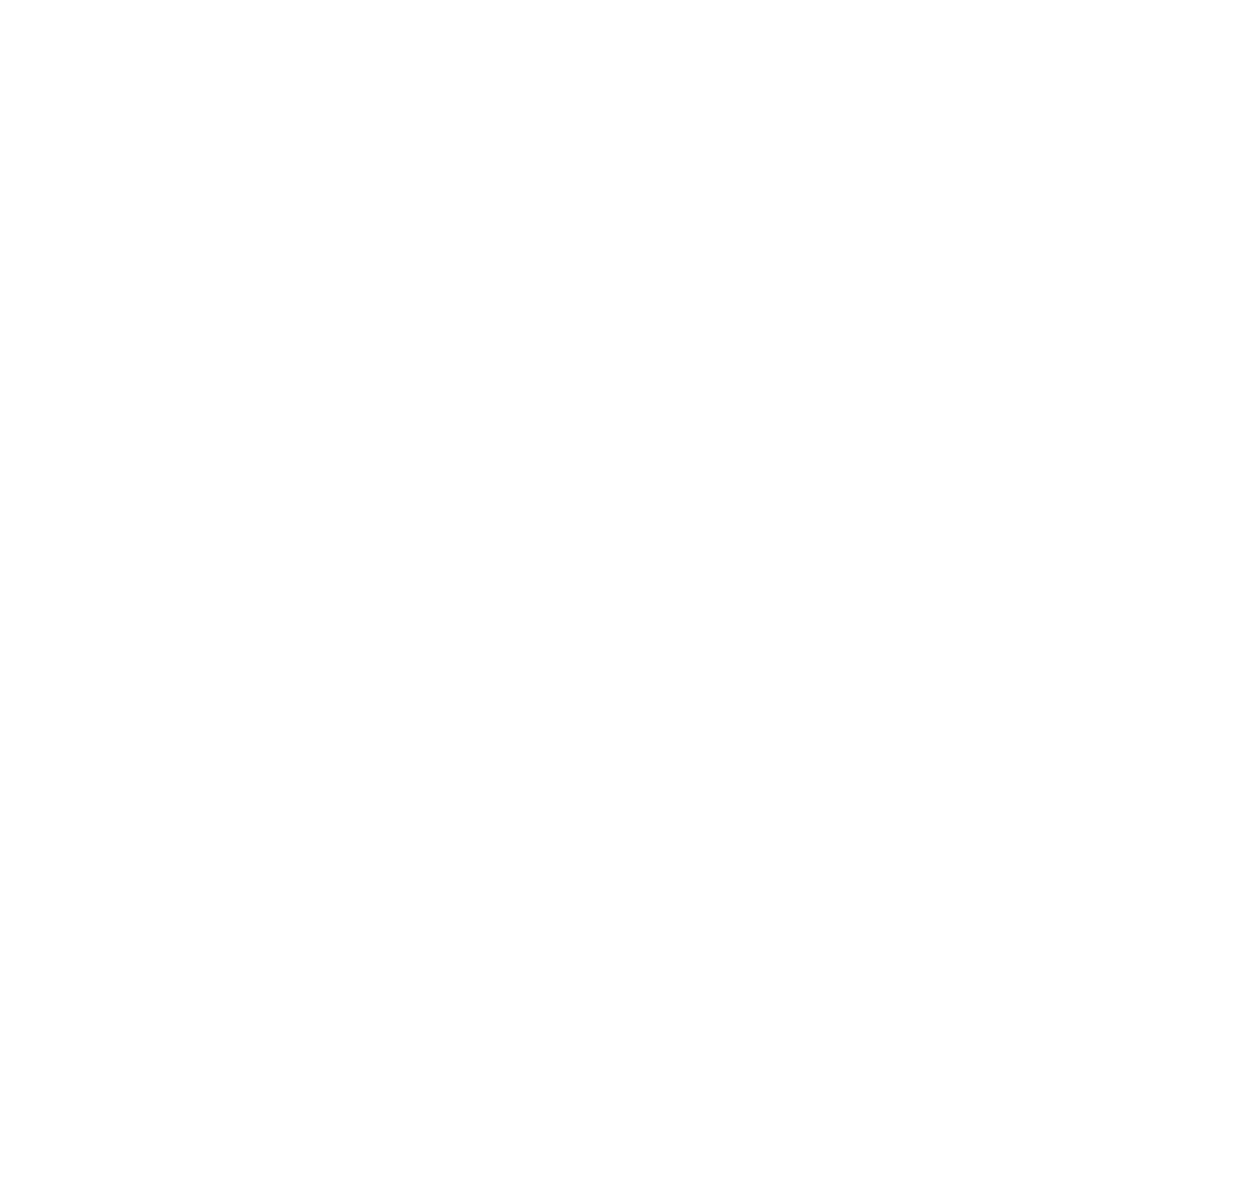 Champaign Logo - City of Champaign GIS